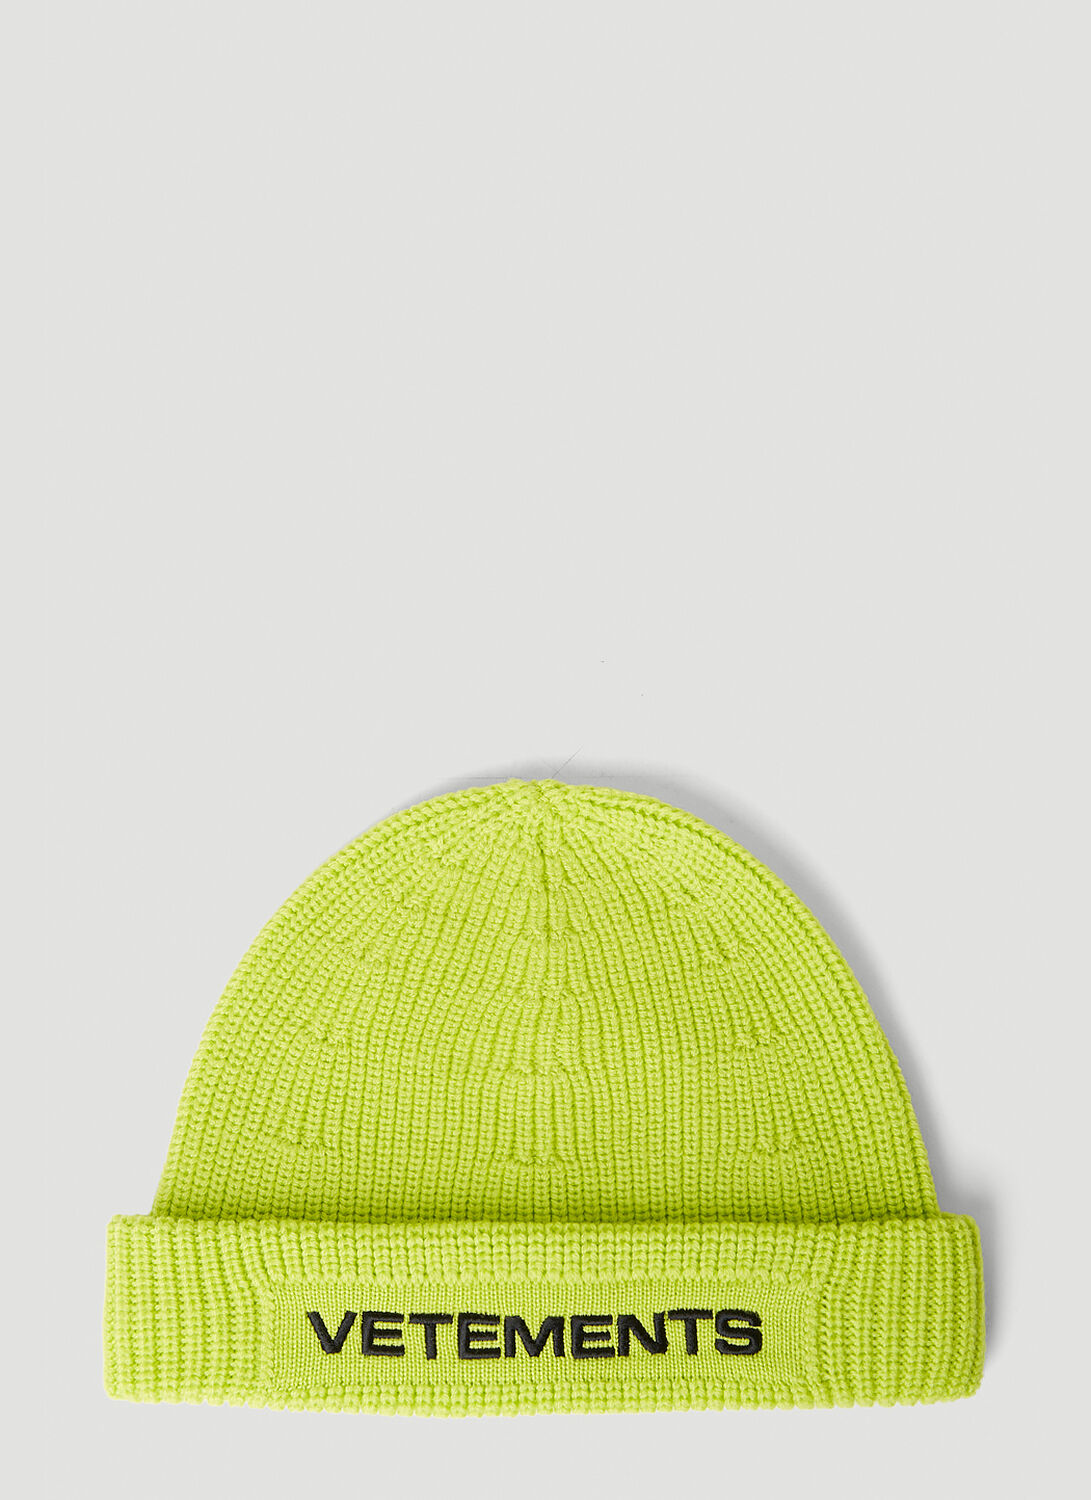 Vetements Logo Beanie Hat In Yellow